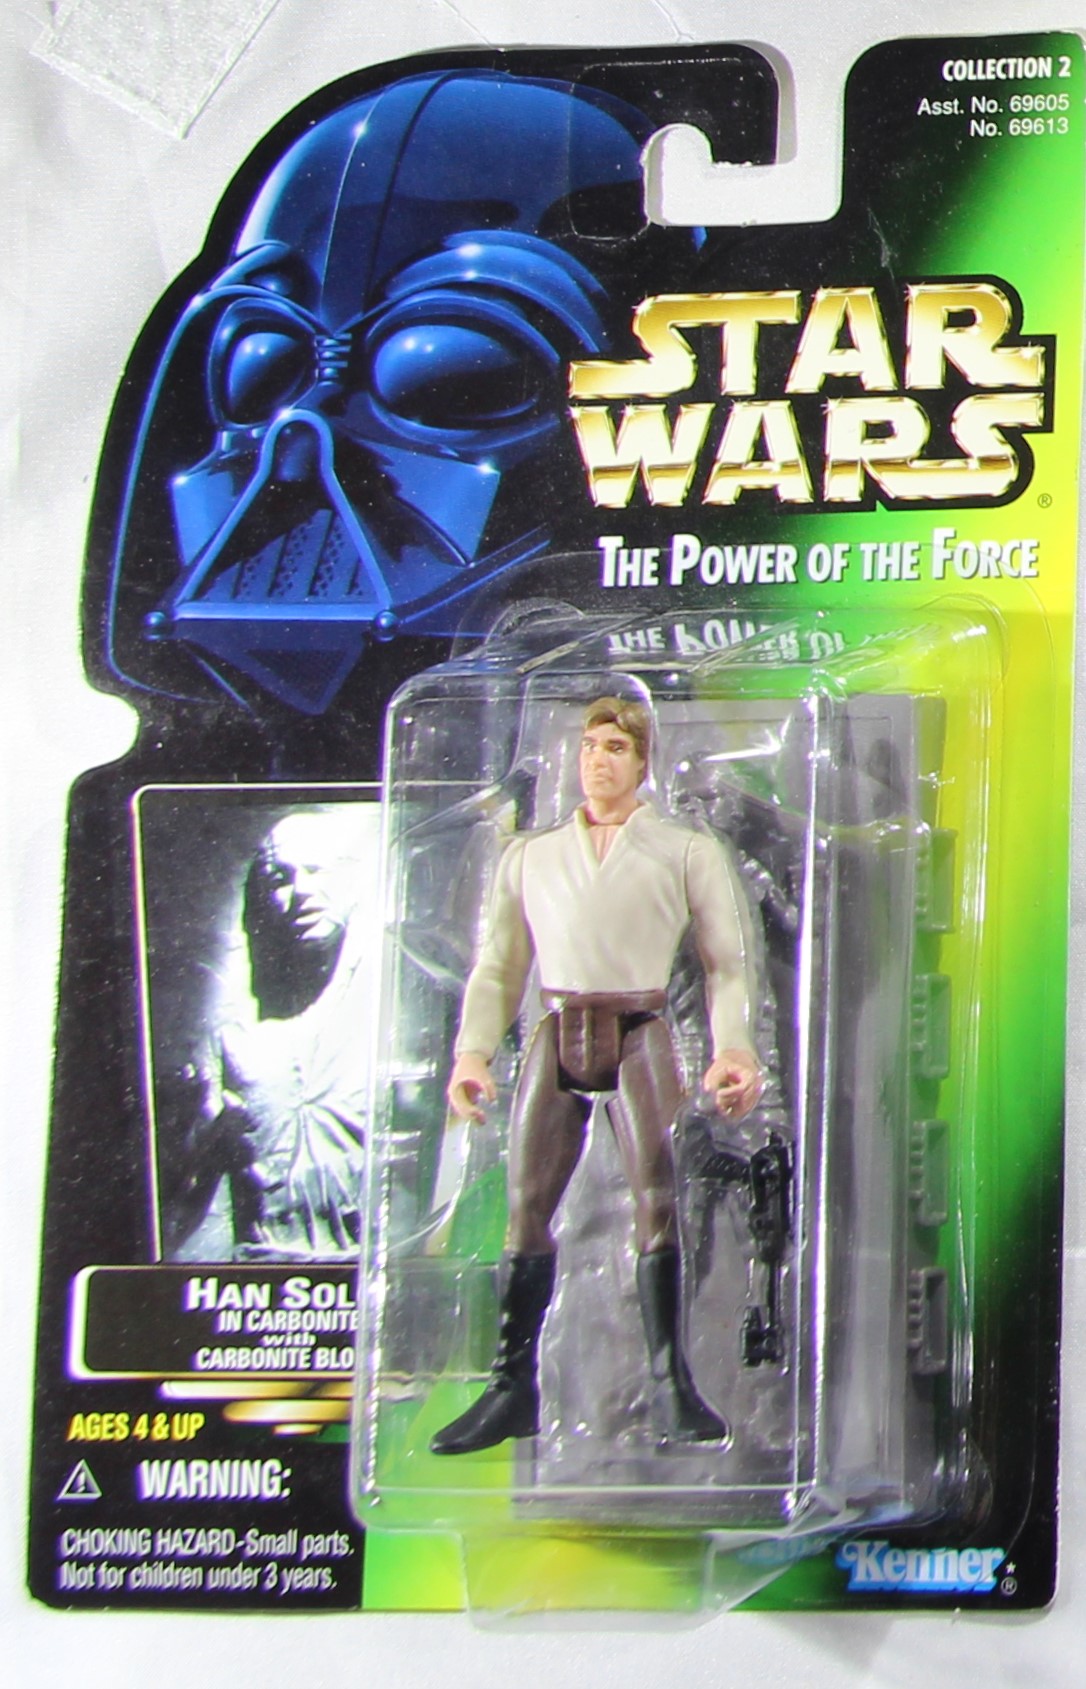 Han Solo - Carbonite